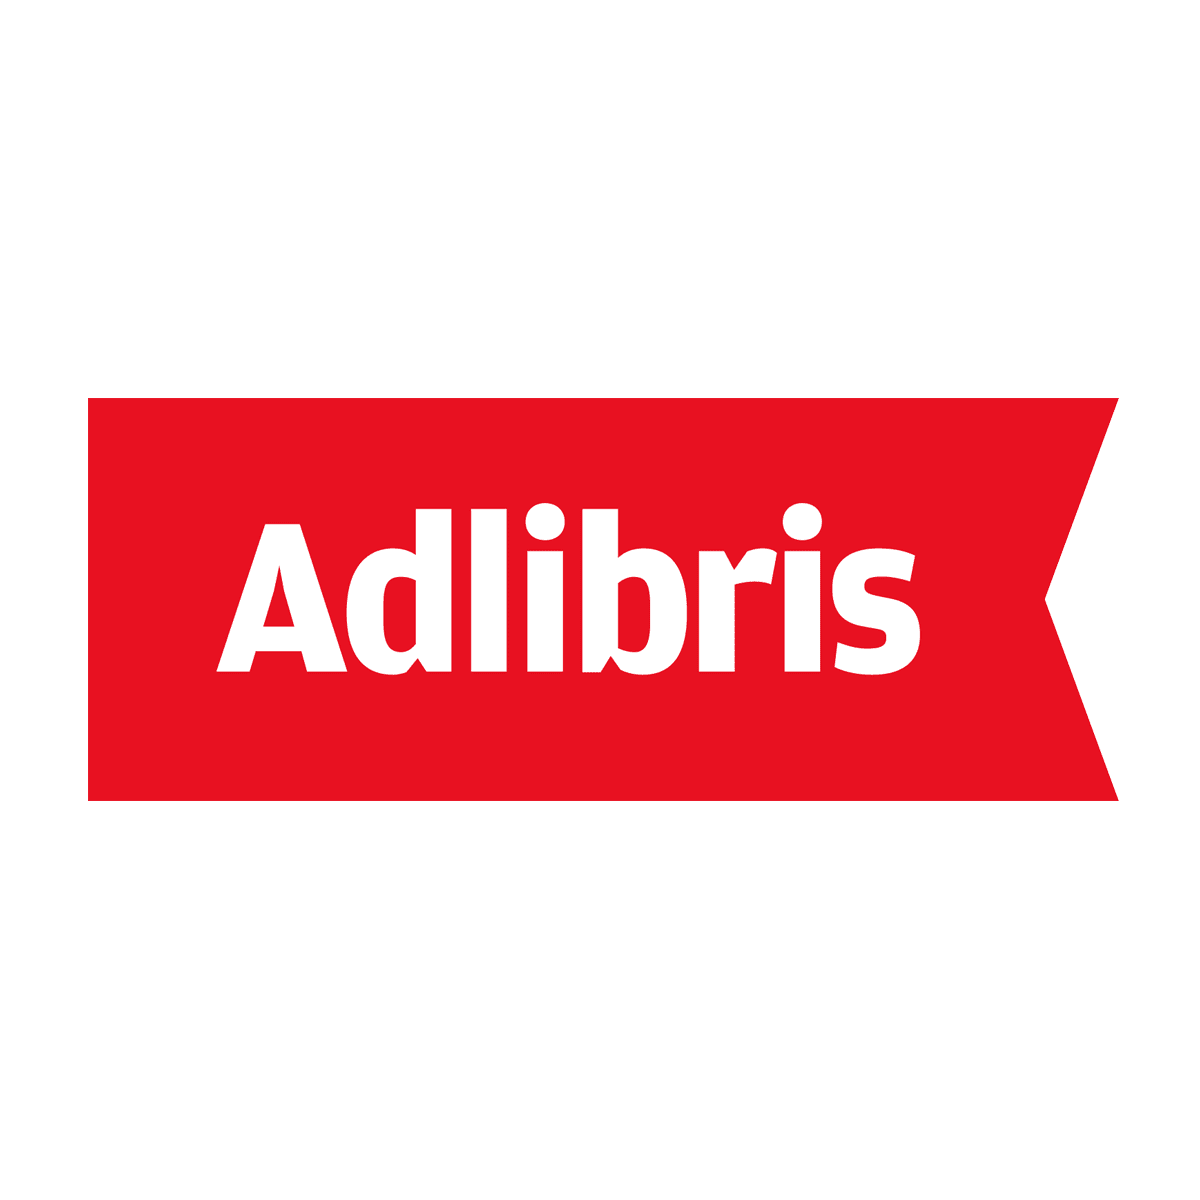 Adlibtis